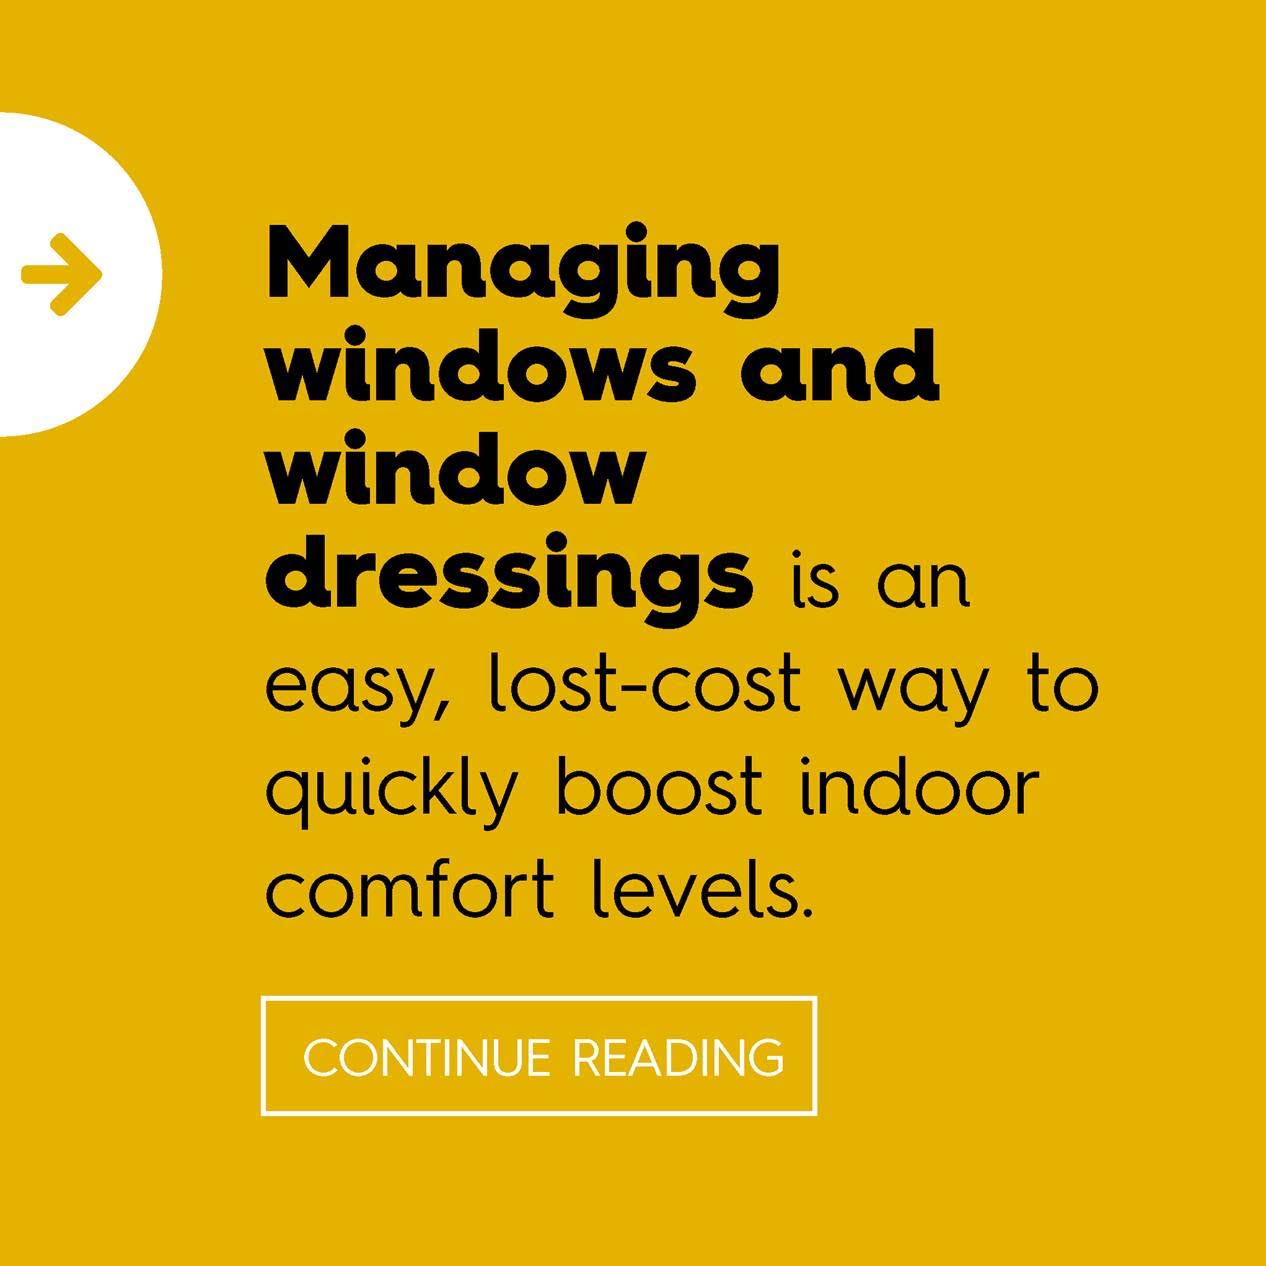 Managing windows and window dressings